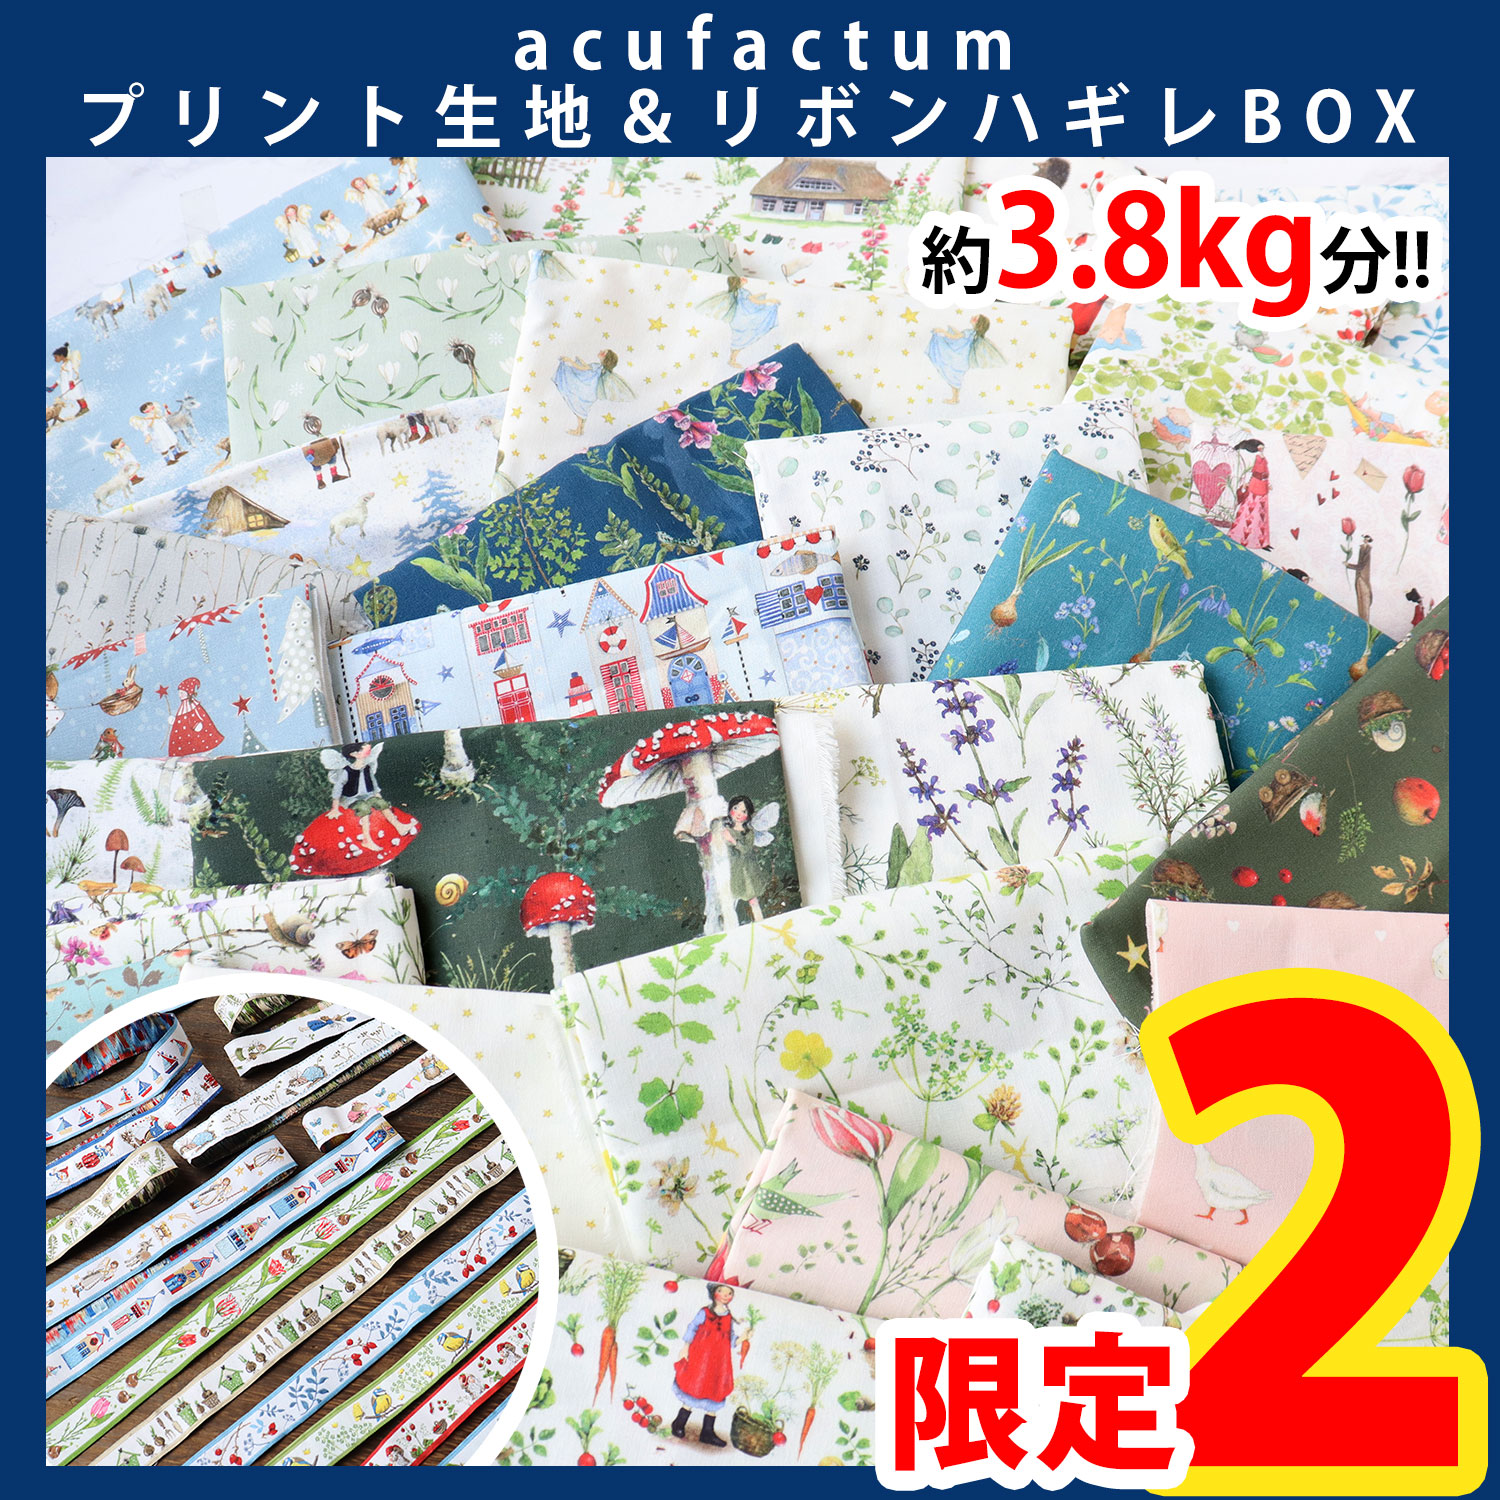 ACUHAGIRE-BOX acufactum Fabric & ribbon tear box (box)